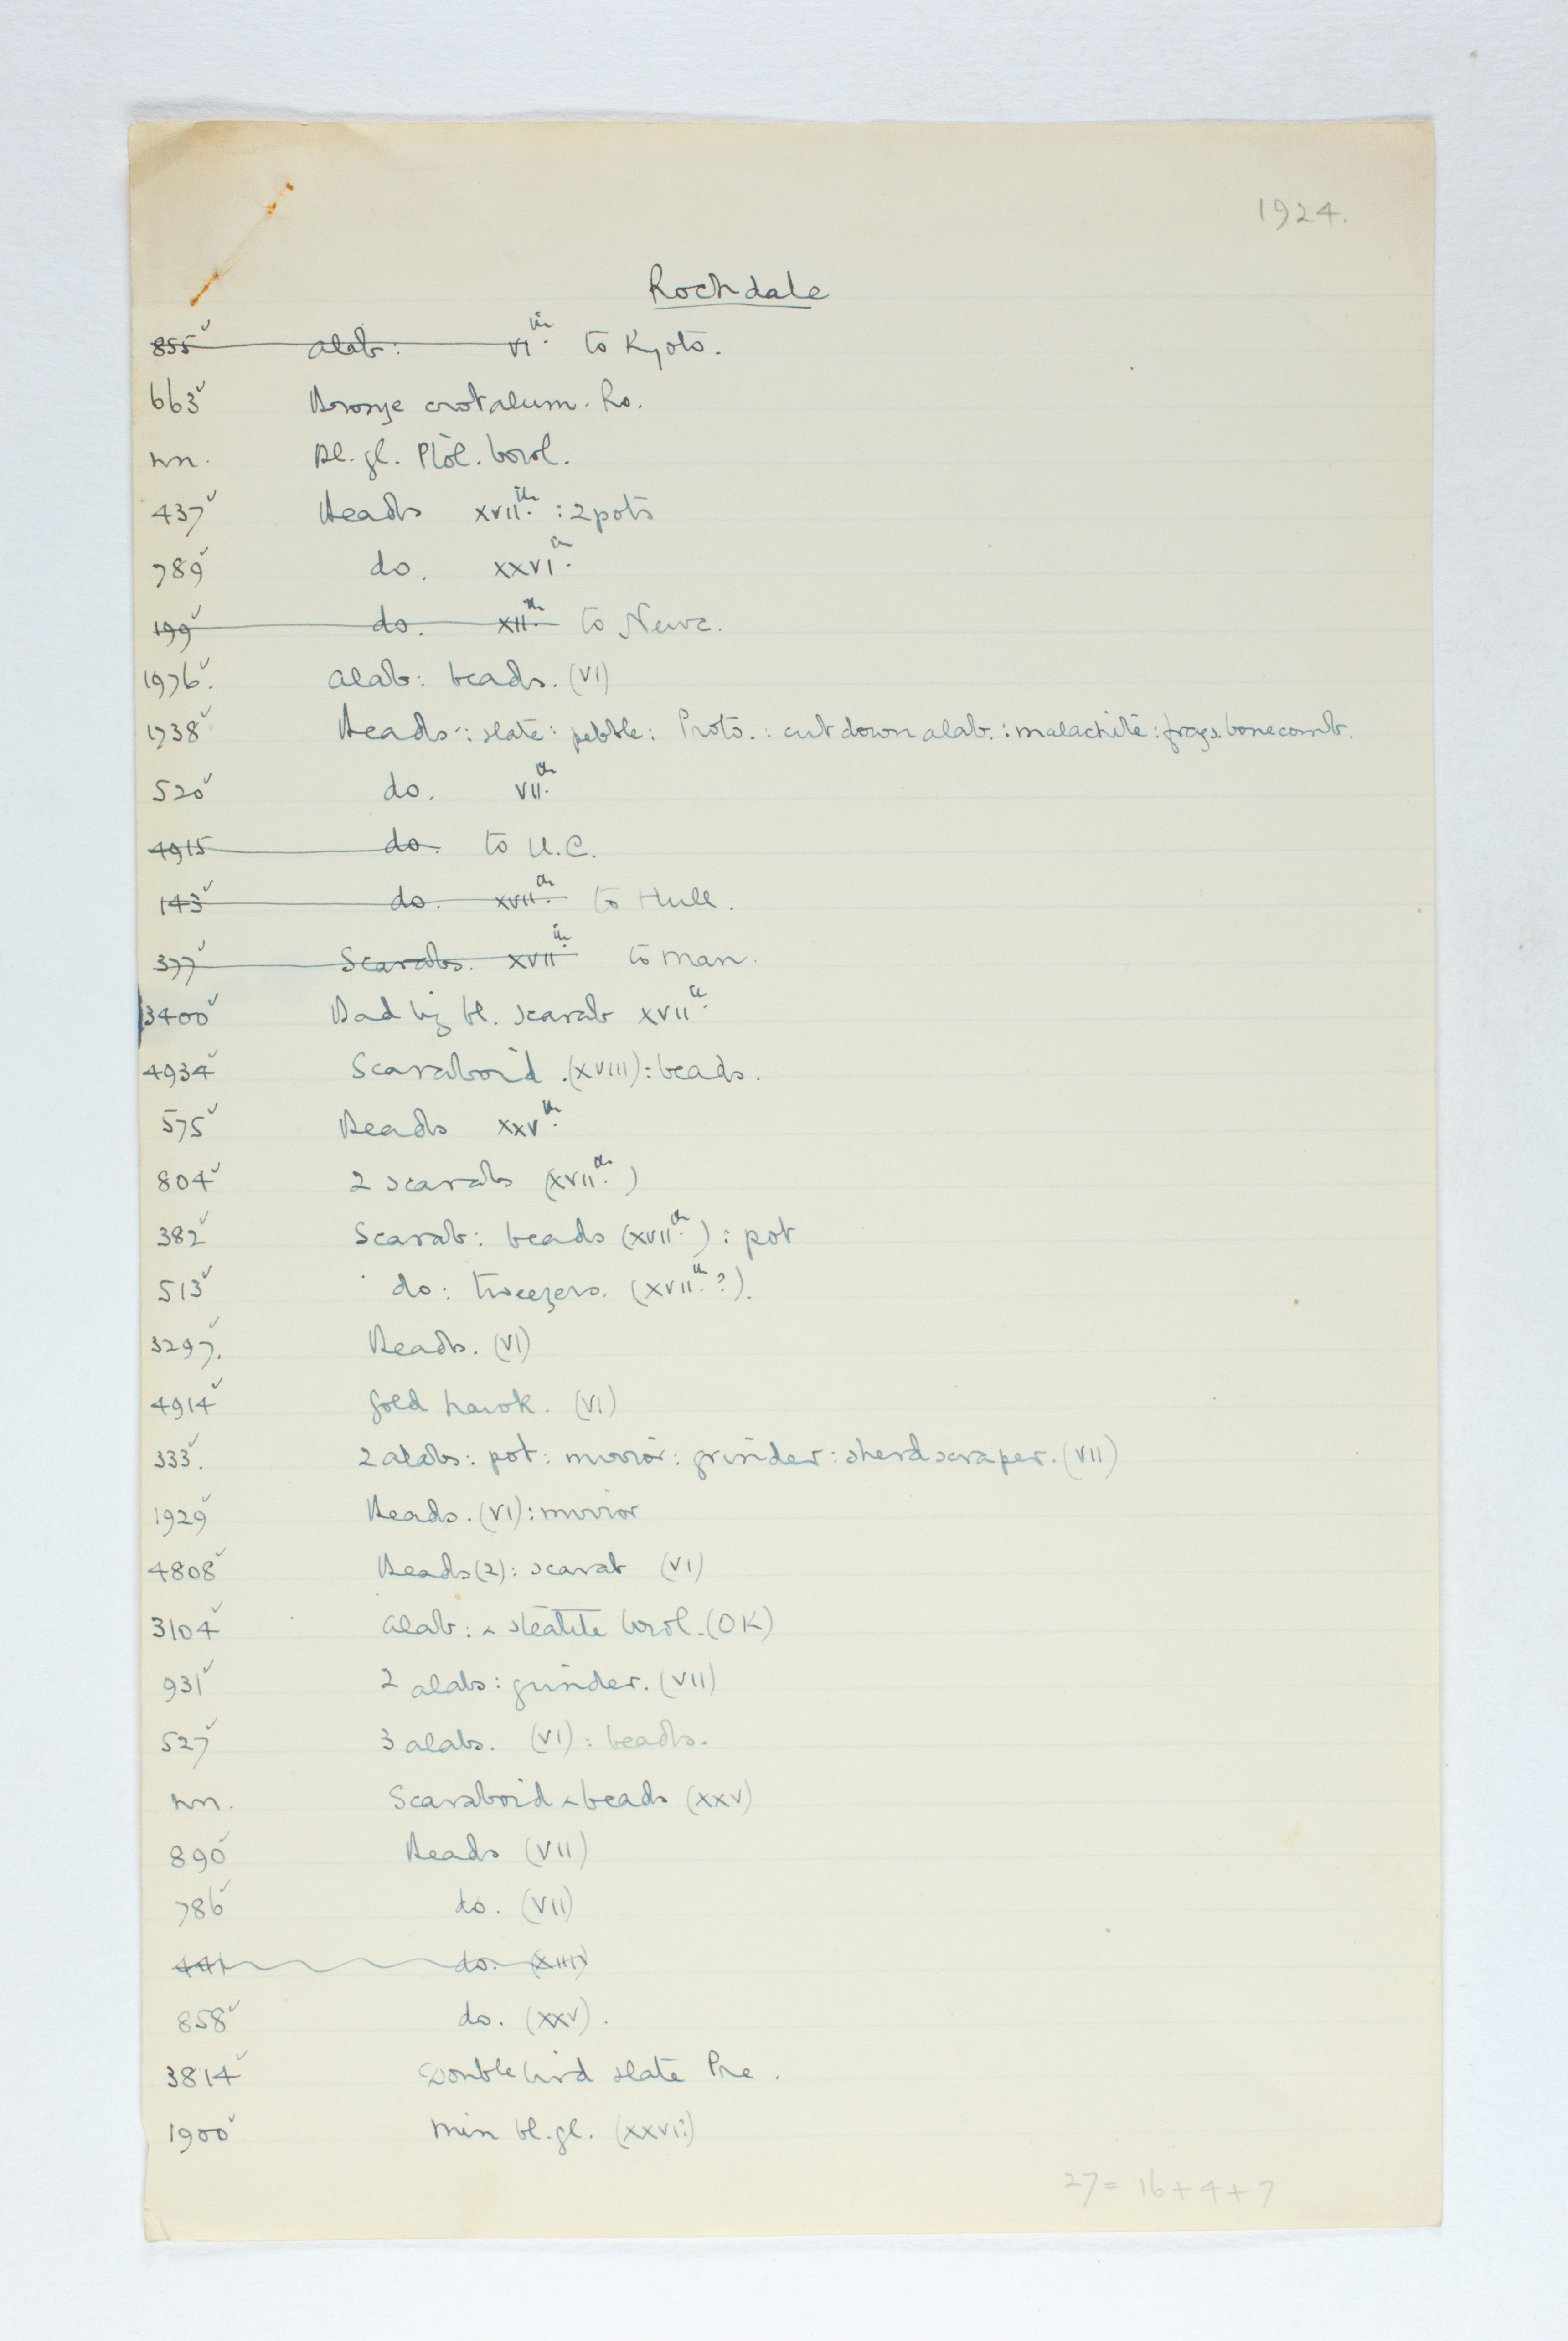 1923-24 Qau el-Kebir, Hemamieh Individual institution list PMA/WFP1/D/27/25.1